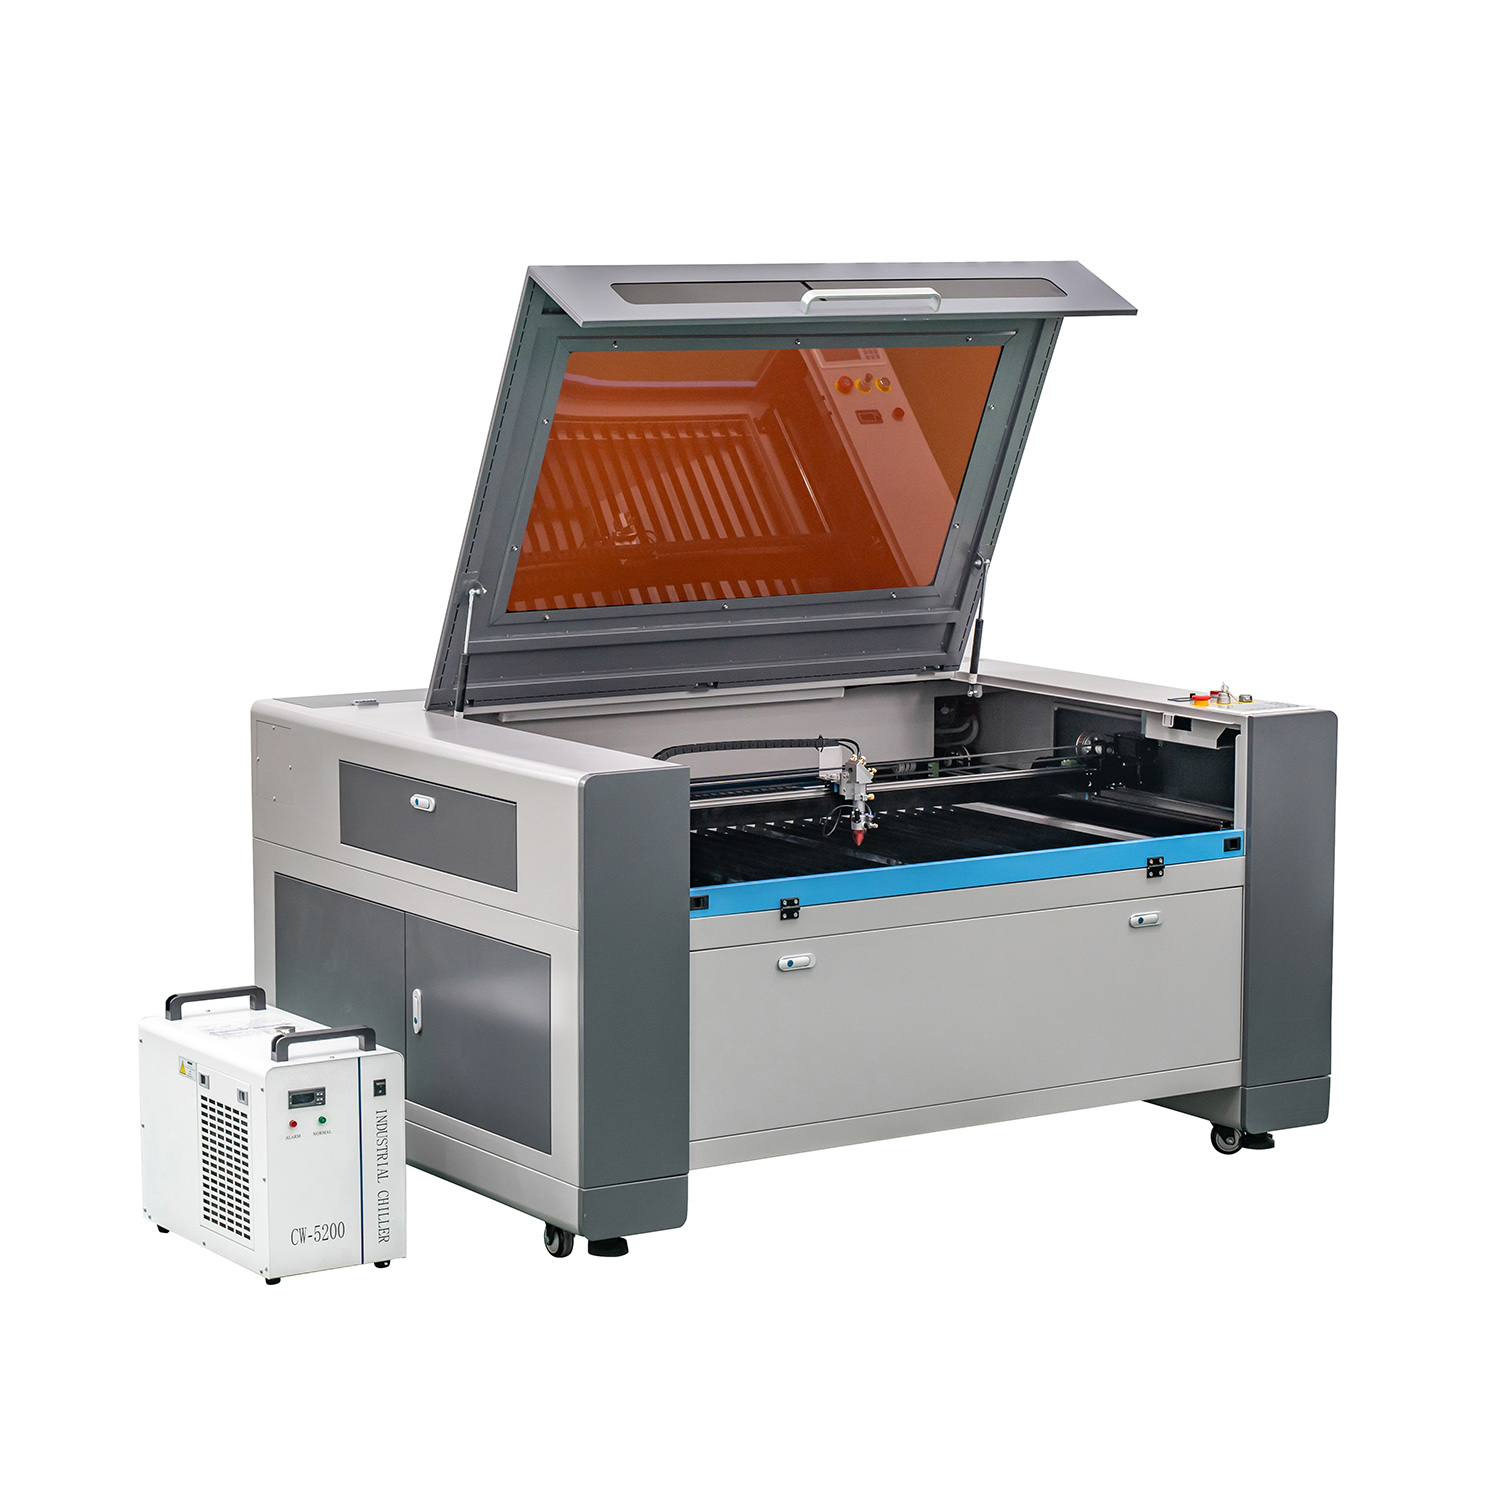 1390 90W 100W 130W 150W 300W Laser Engraver Cutter CO2 Laser Cutting Machine for Acrylic, wood, leather, plastic, glass, density board